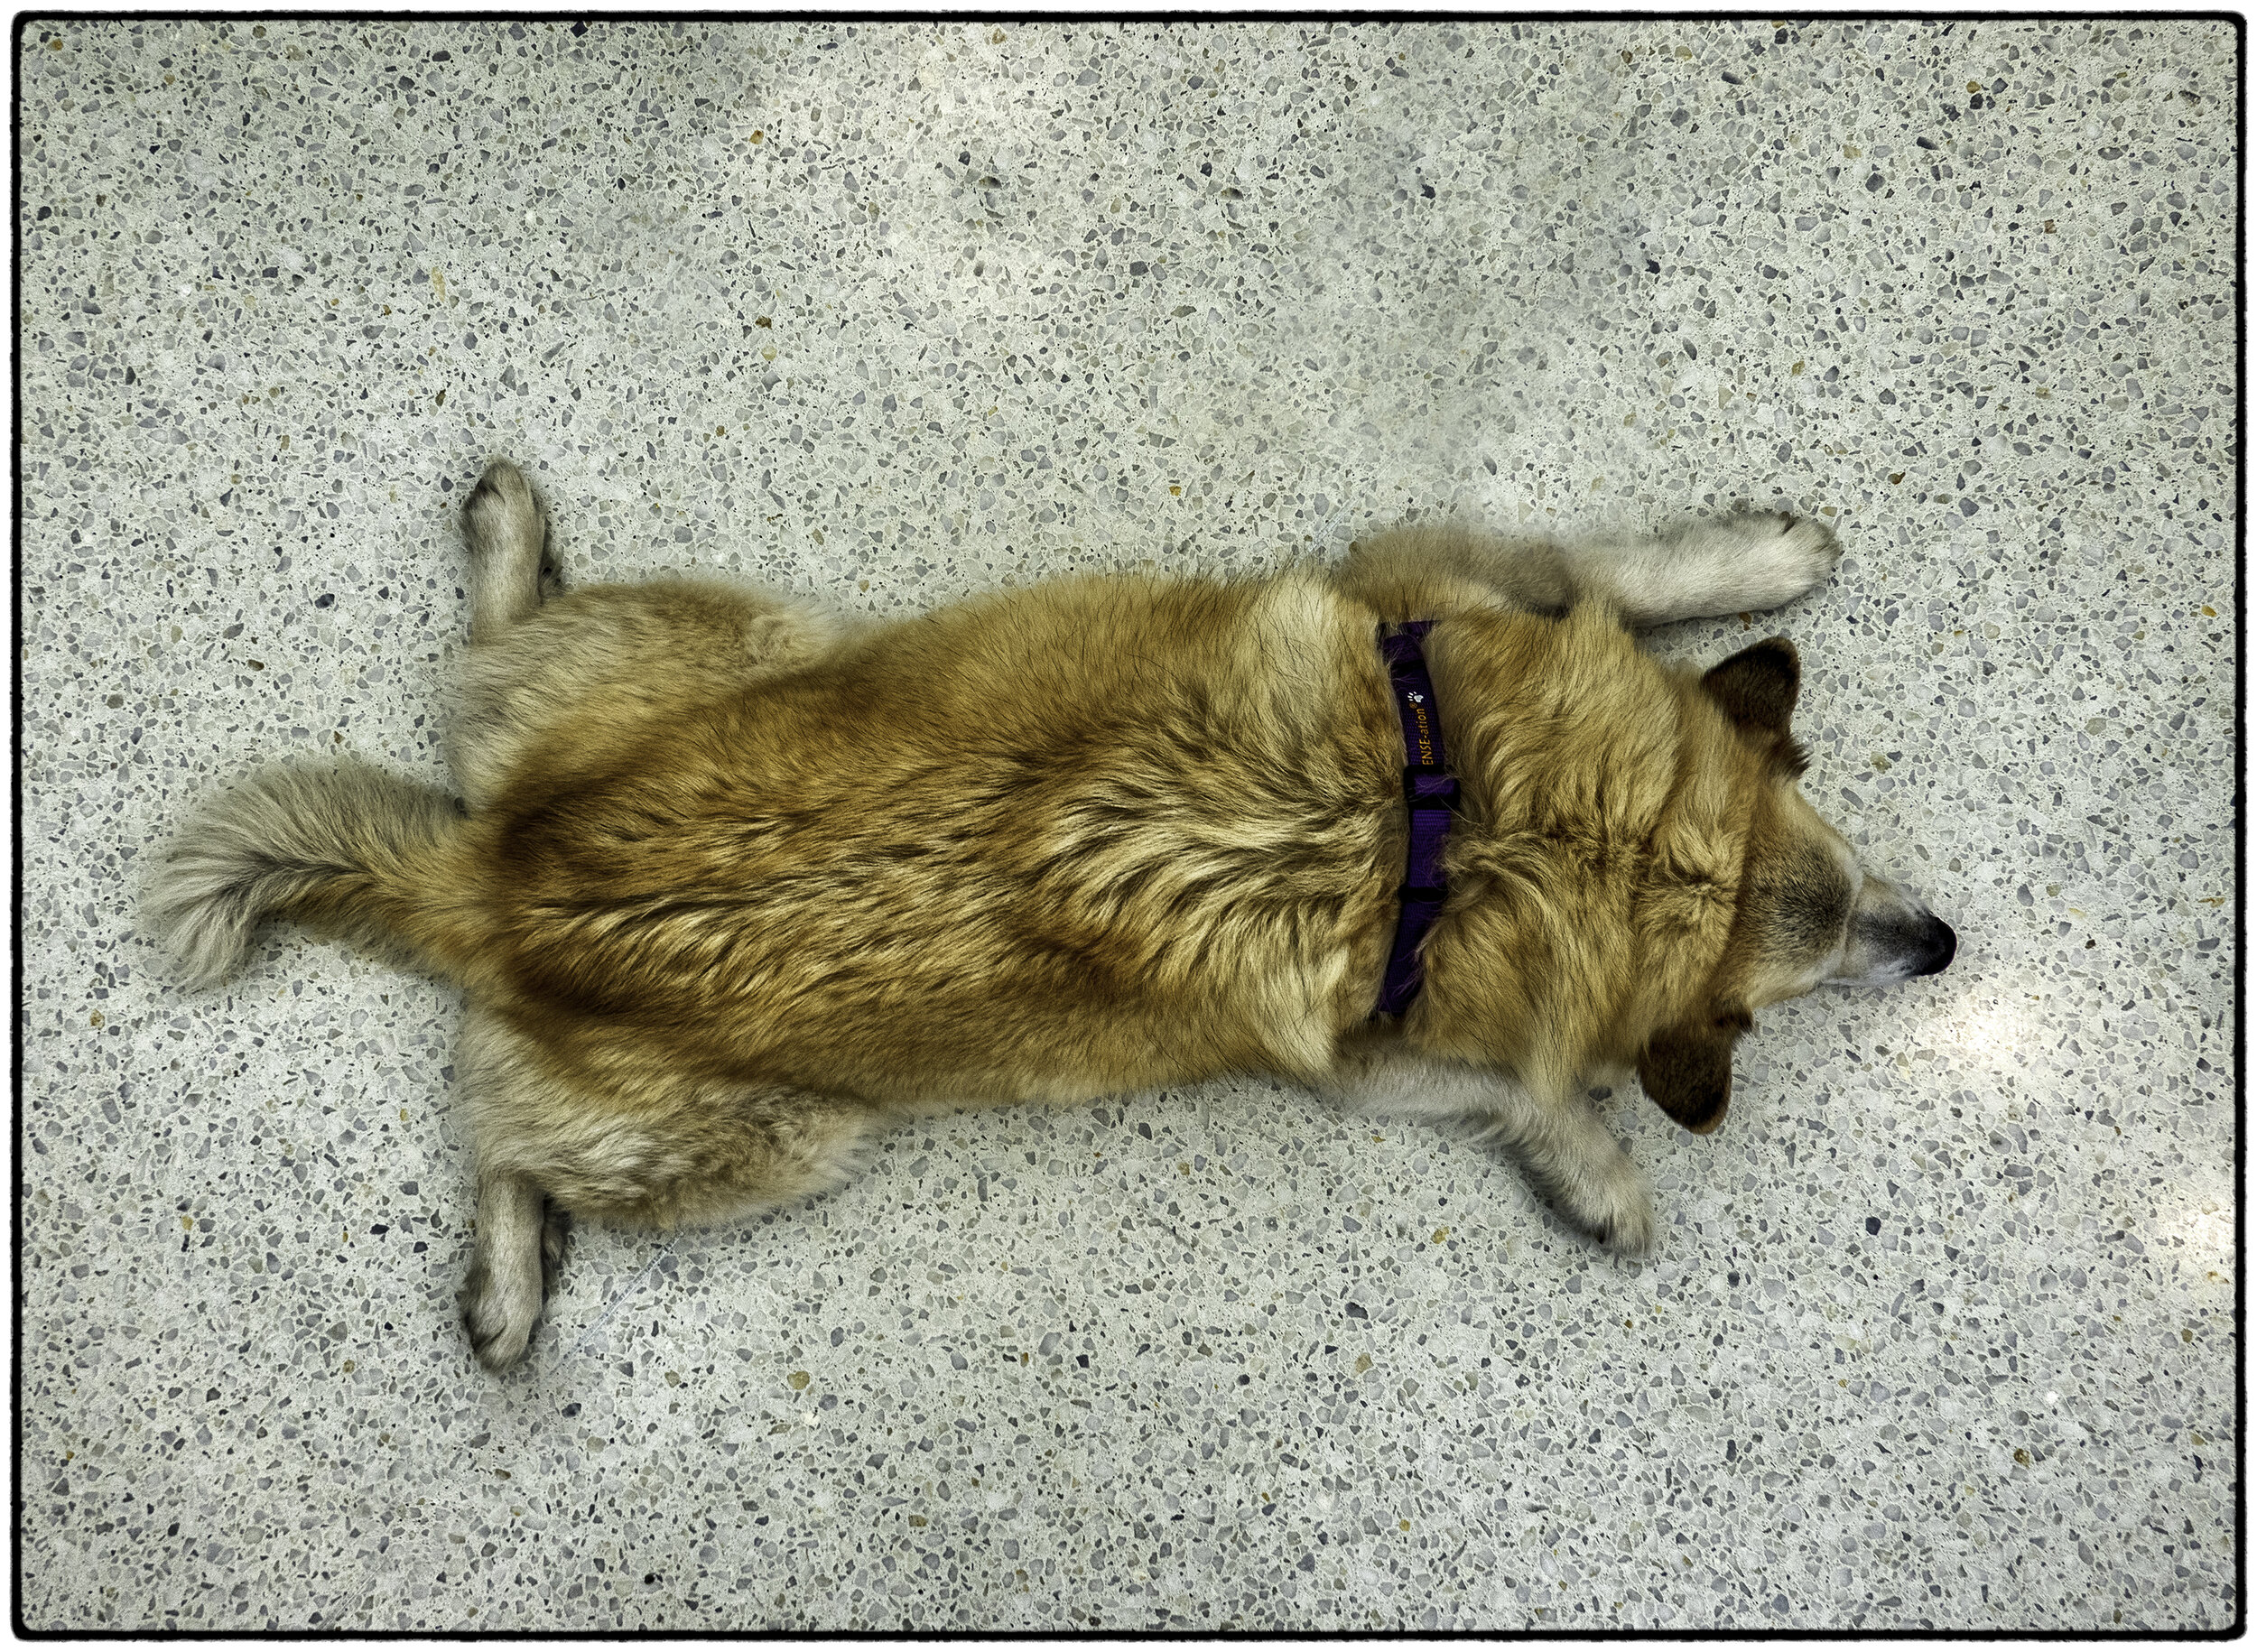 Sleeping Dog, Apple Store, Corte Madera